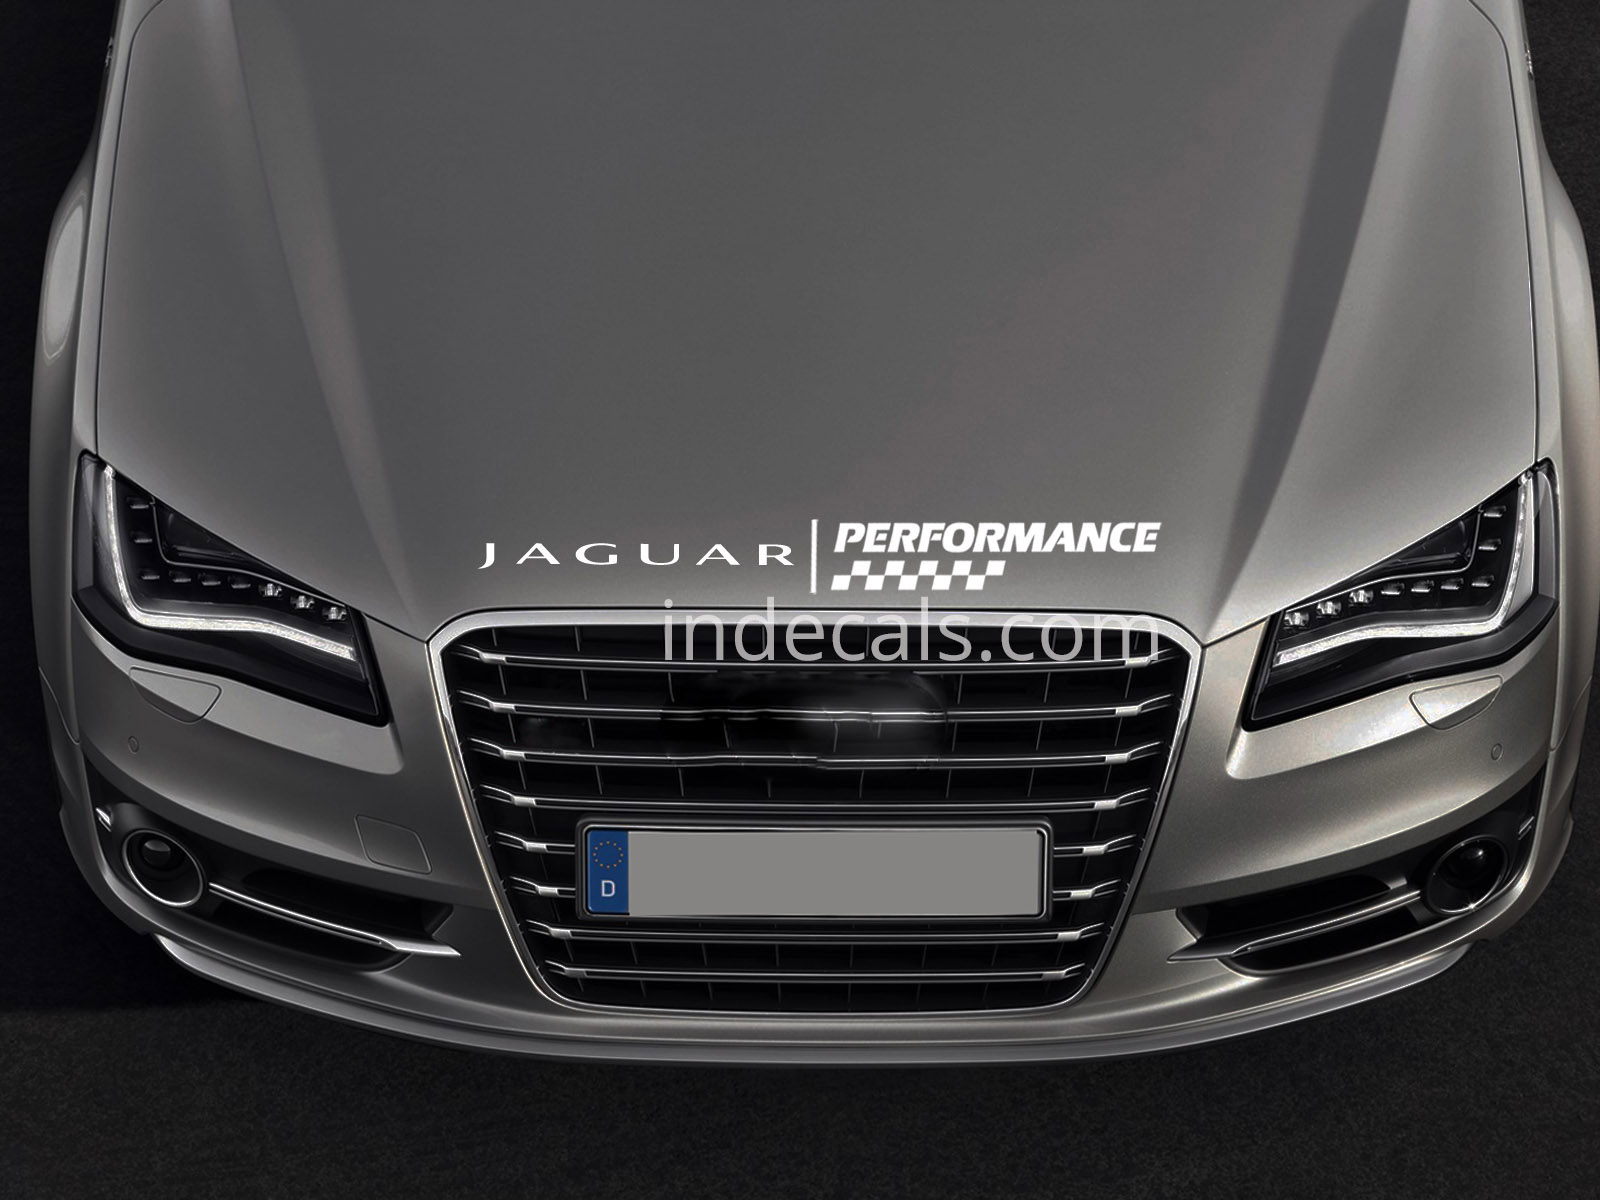 1 x Jaguar Peformance Sticker for Bonnet - White